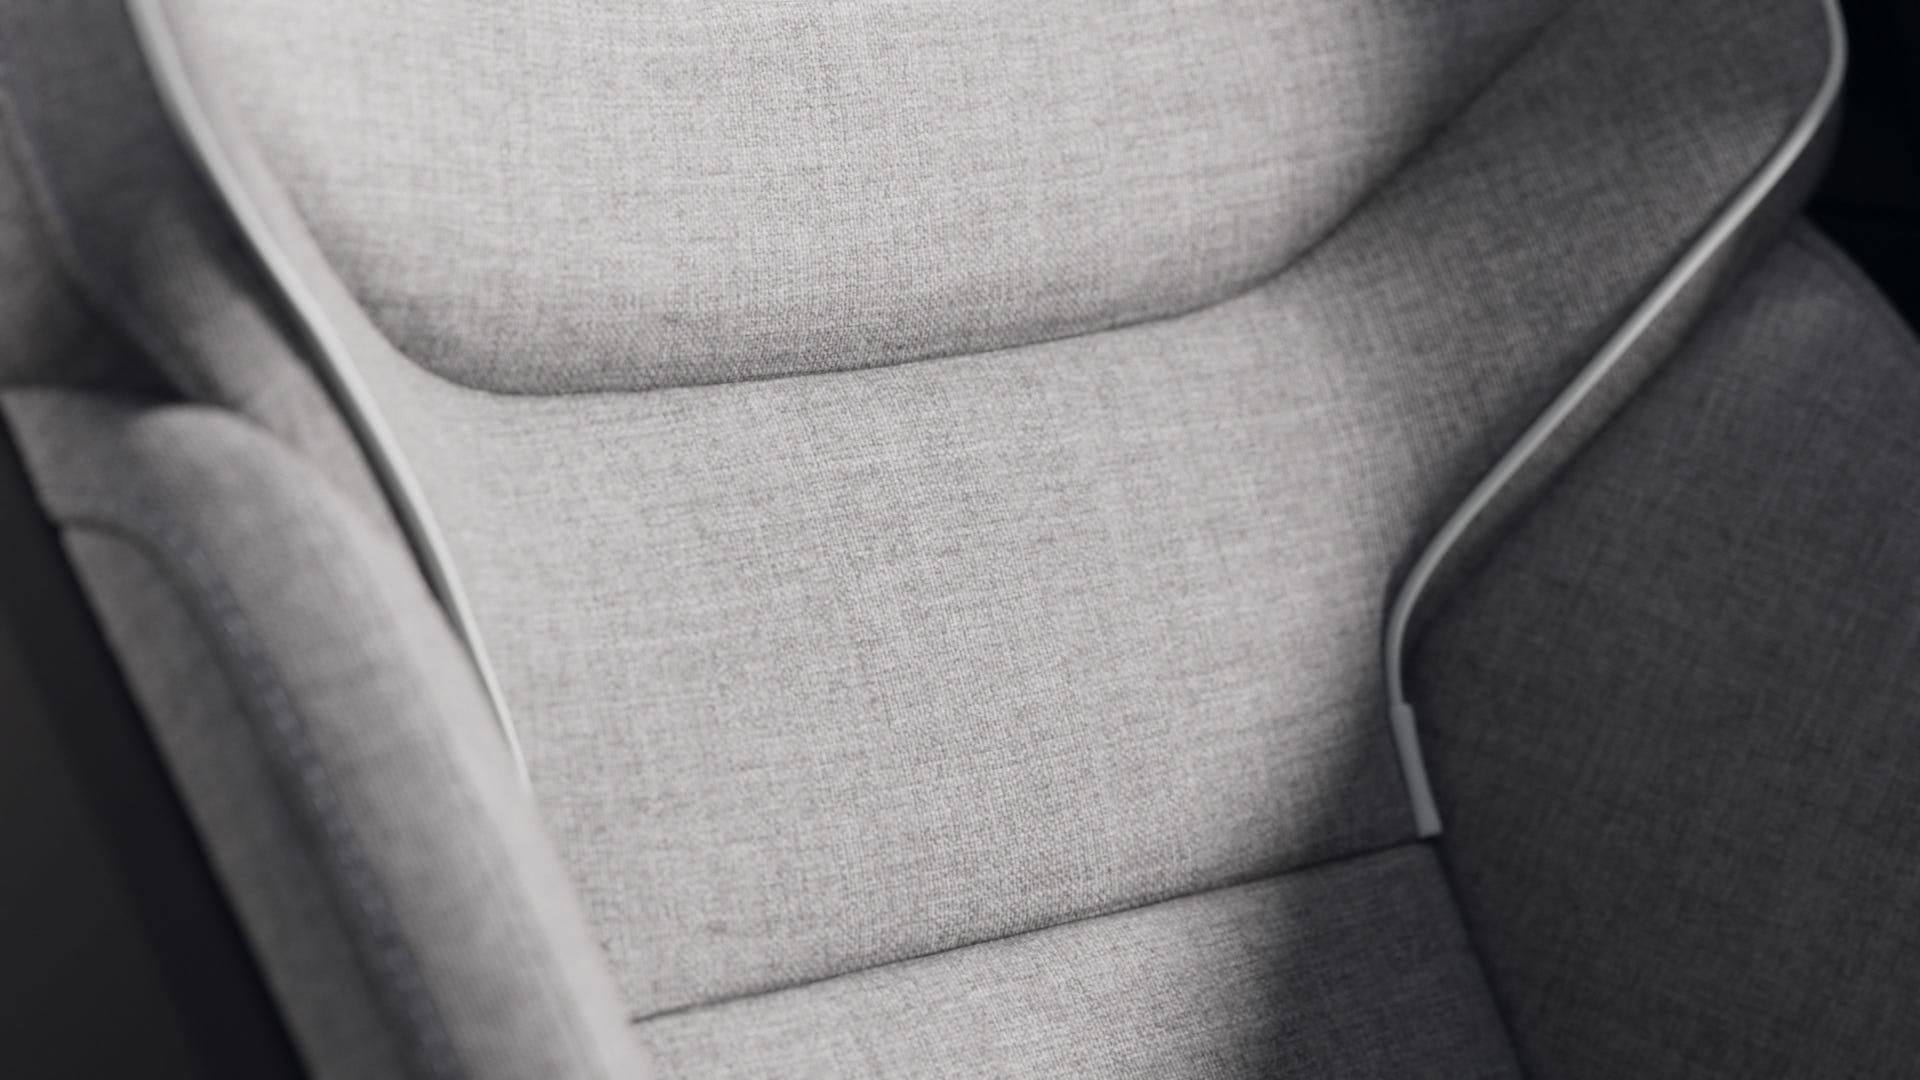 Nordico fabric seat (gray) close up